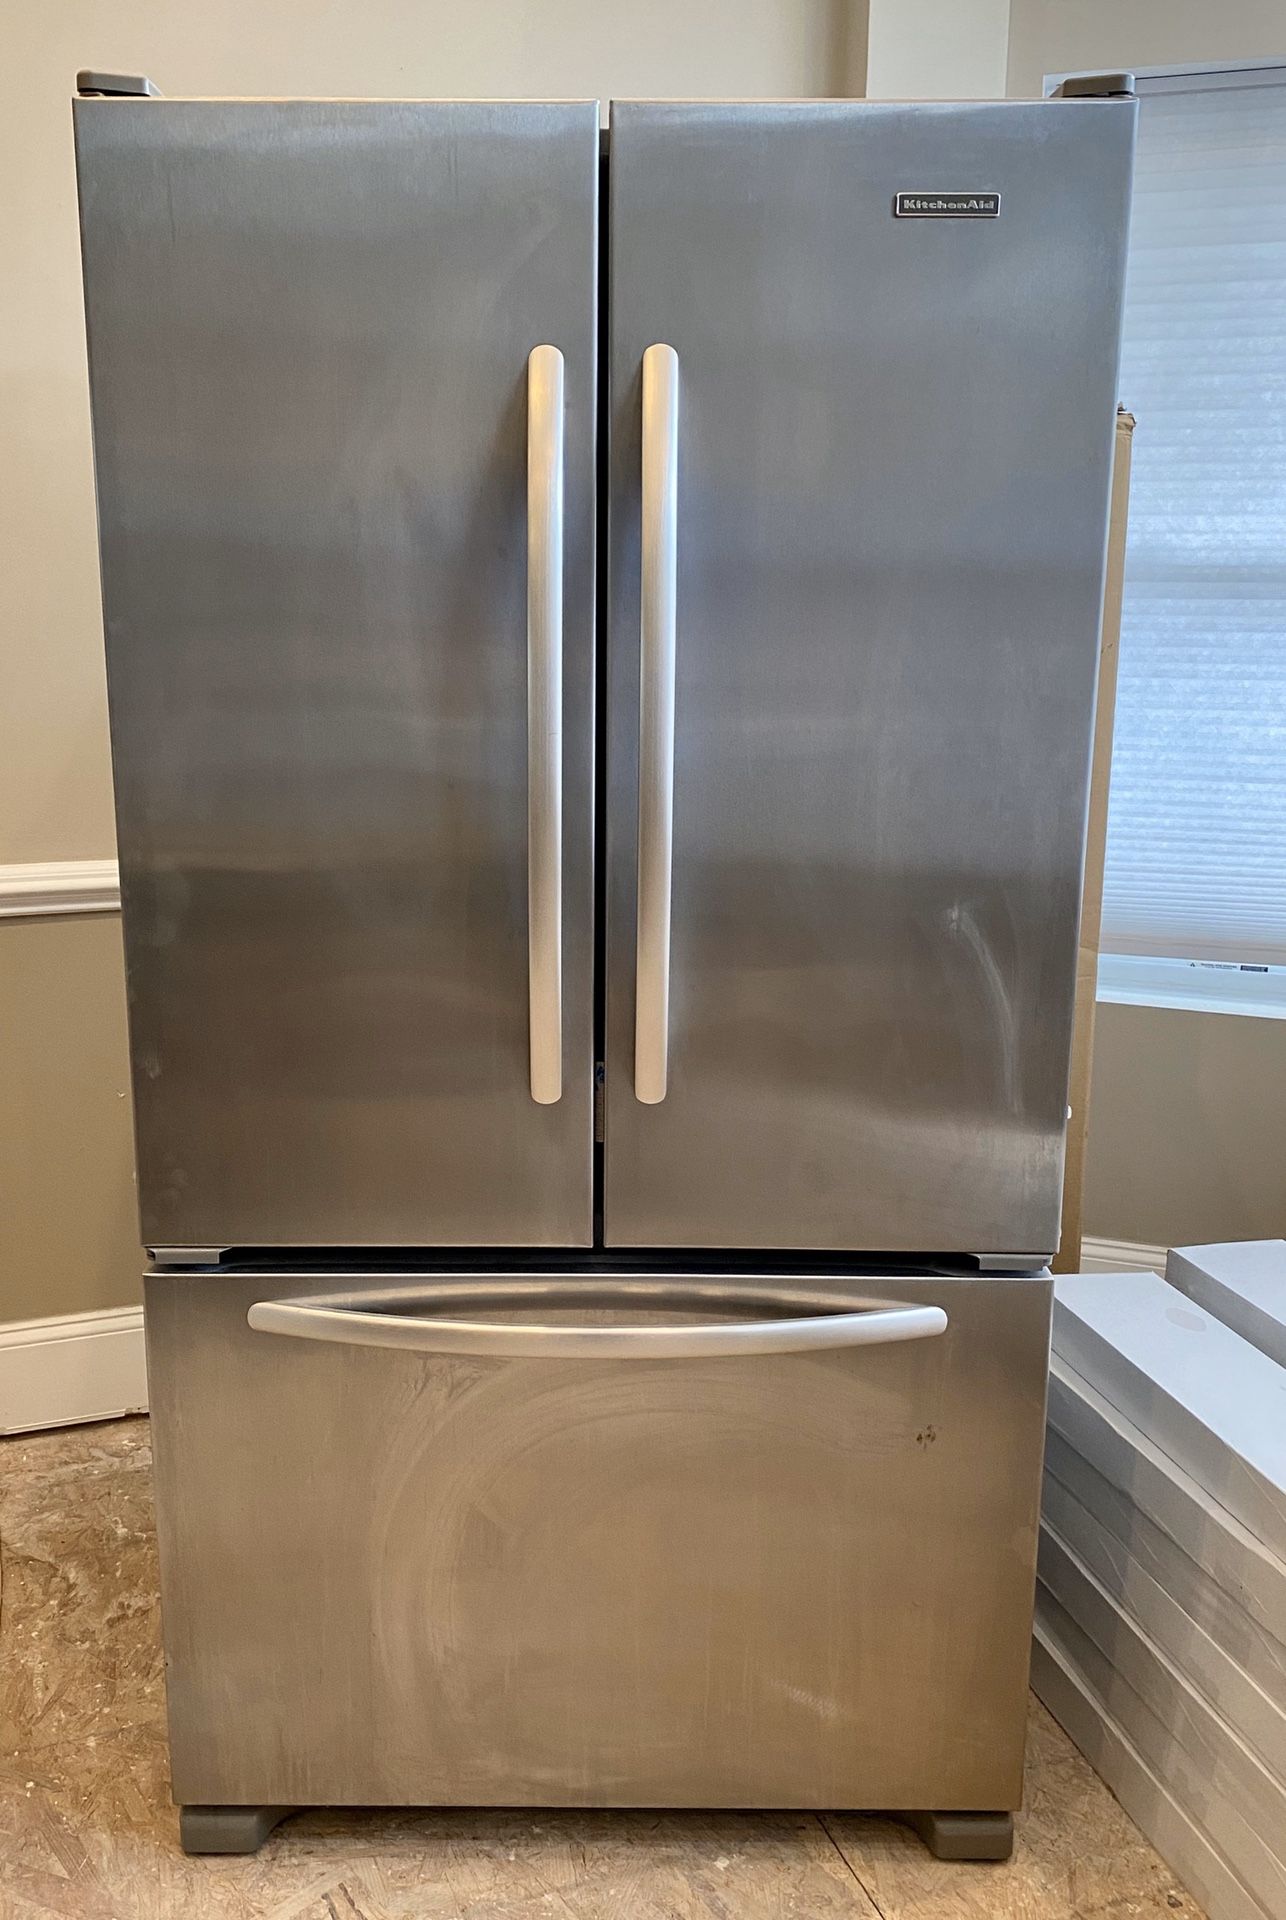 KitchenAid Refrigerator - Good Condition!